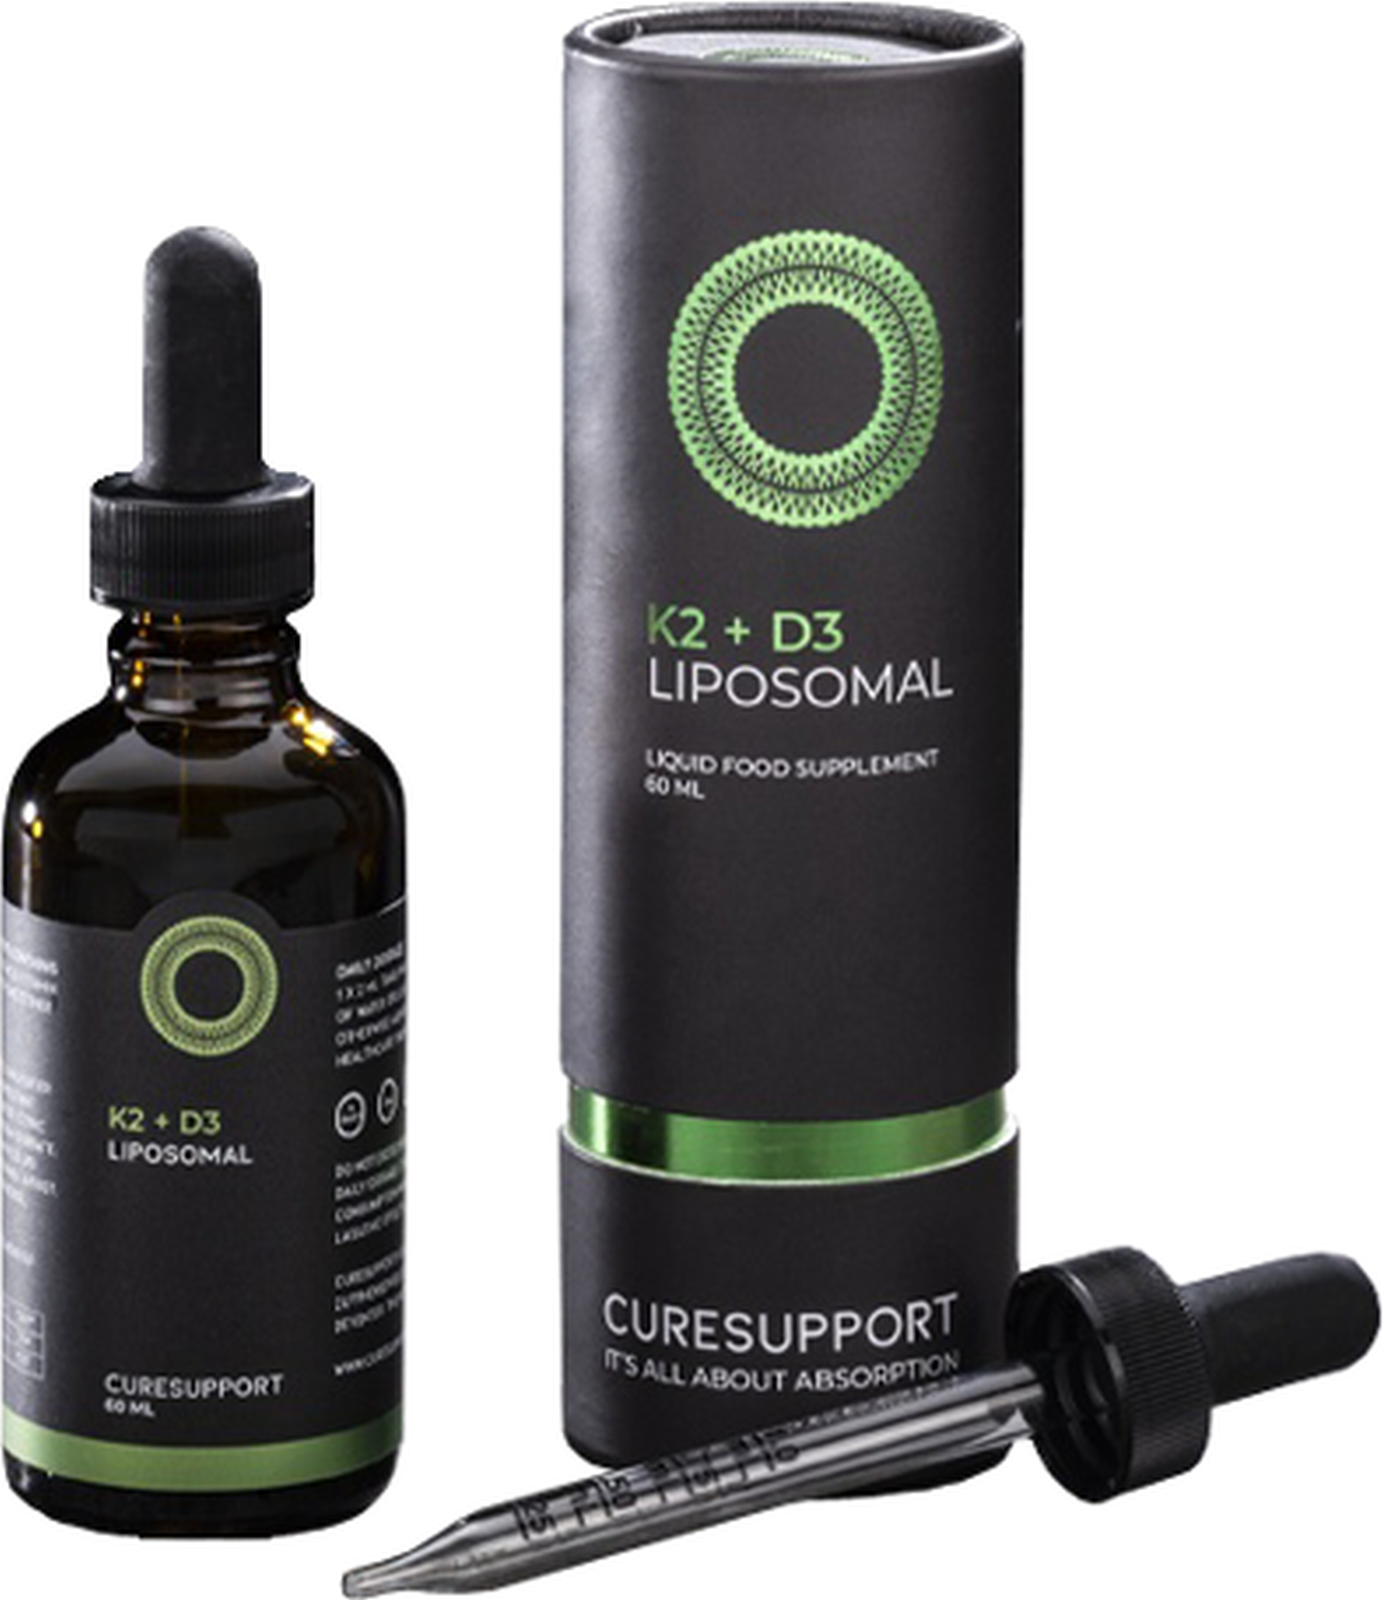 CureSupport Vitamin K2 + D3 Liposomal